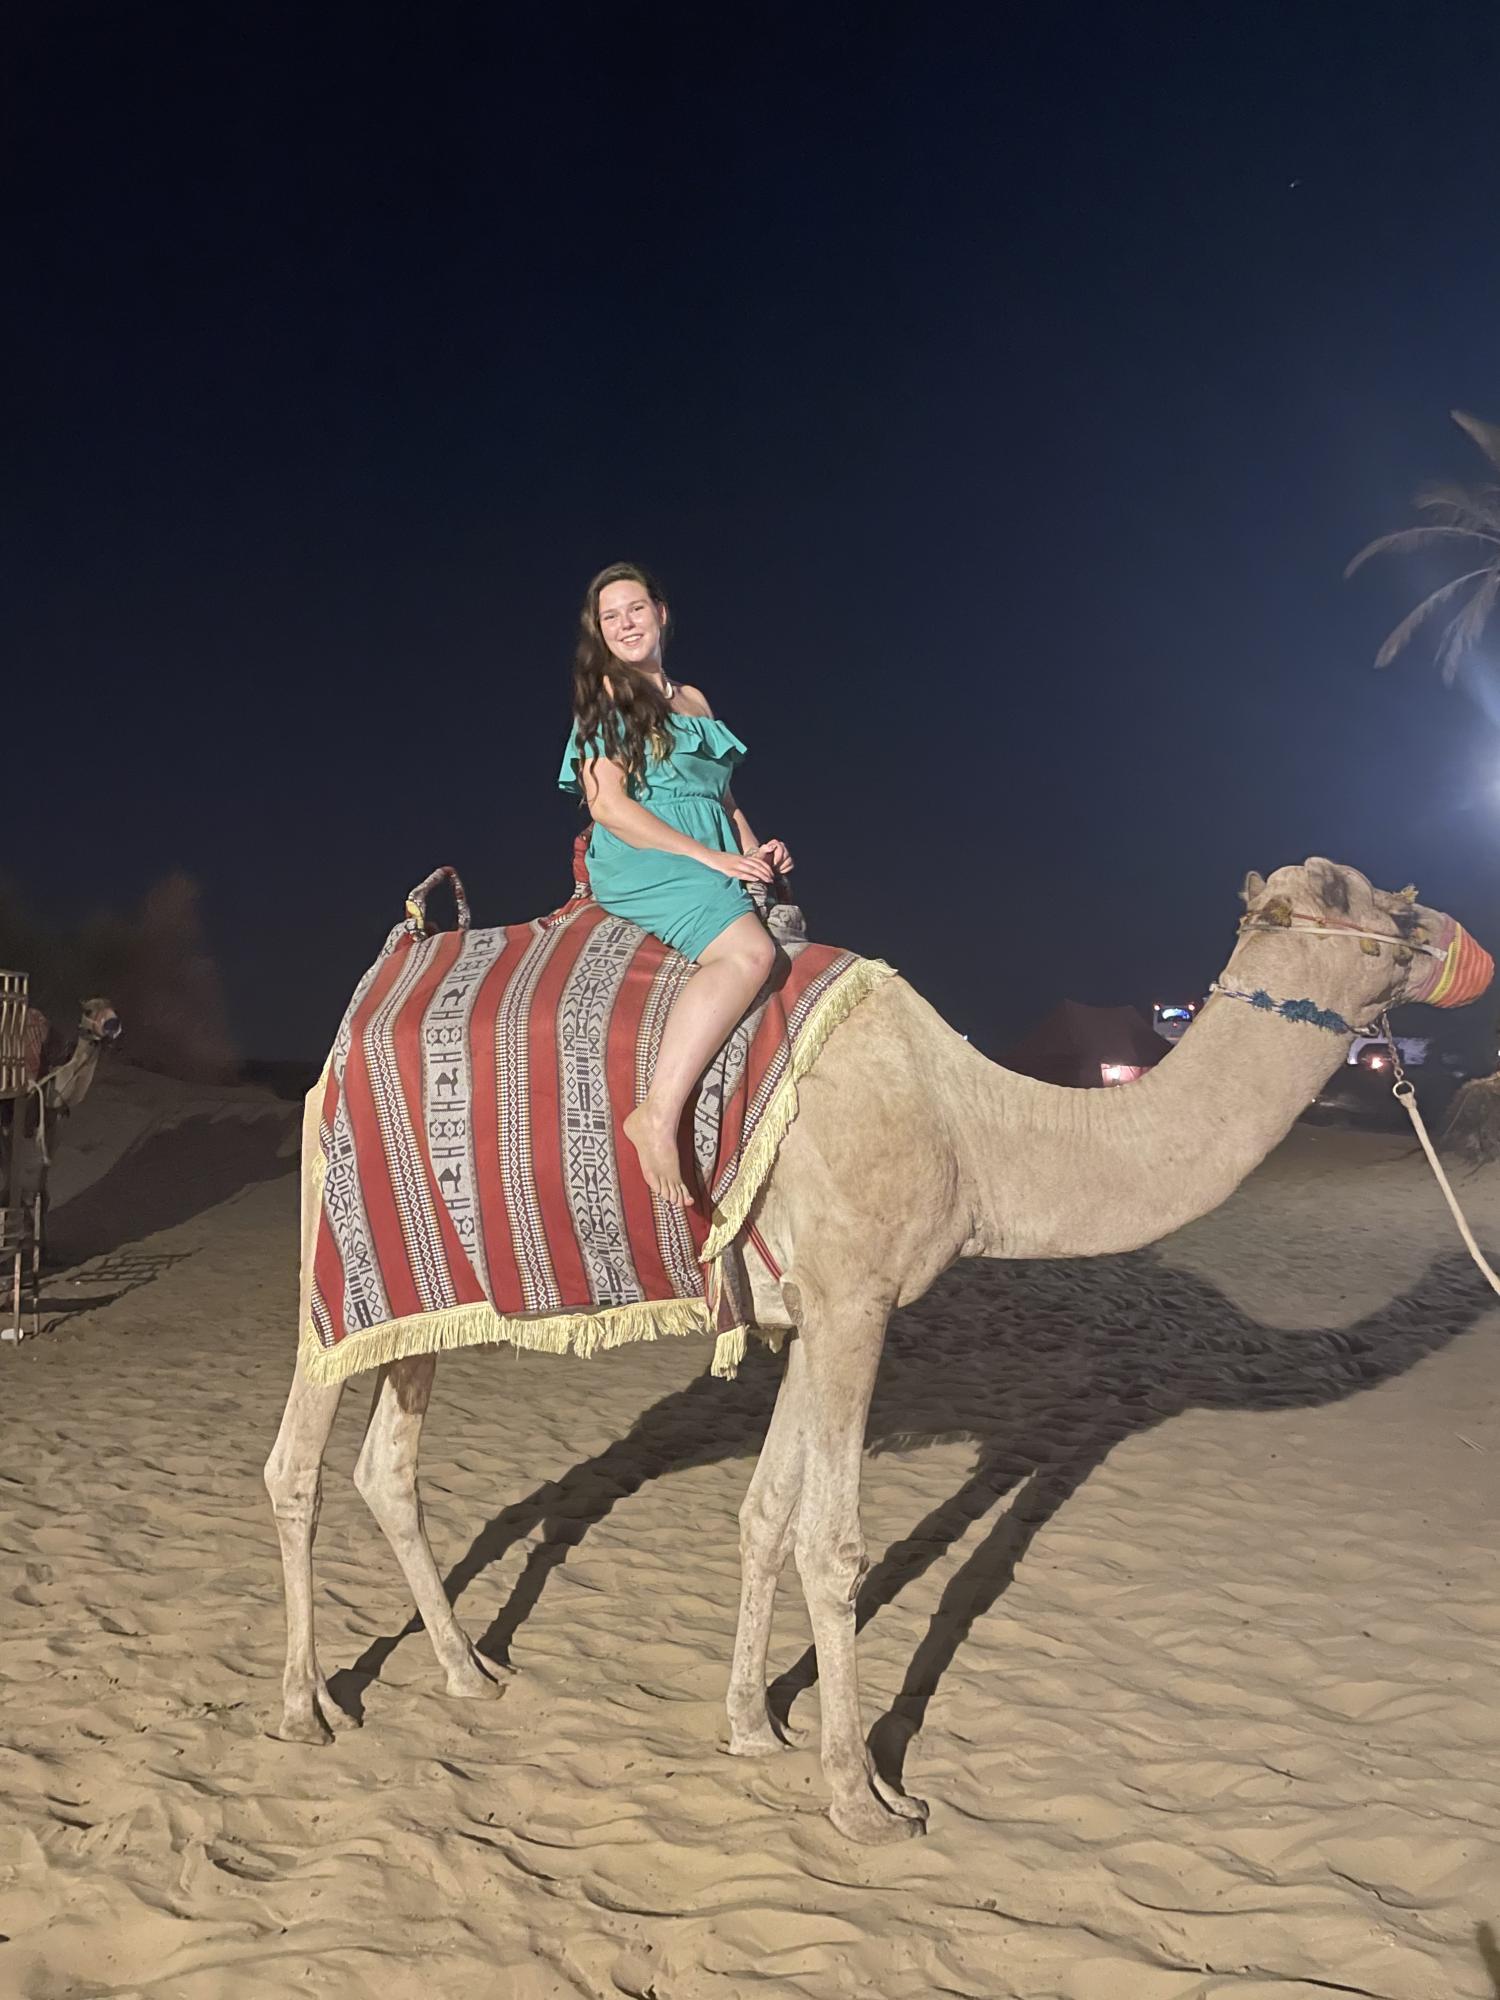 Molly on a Camel